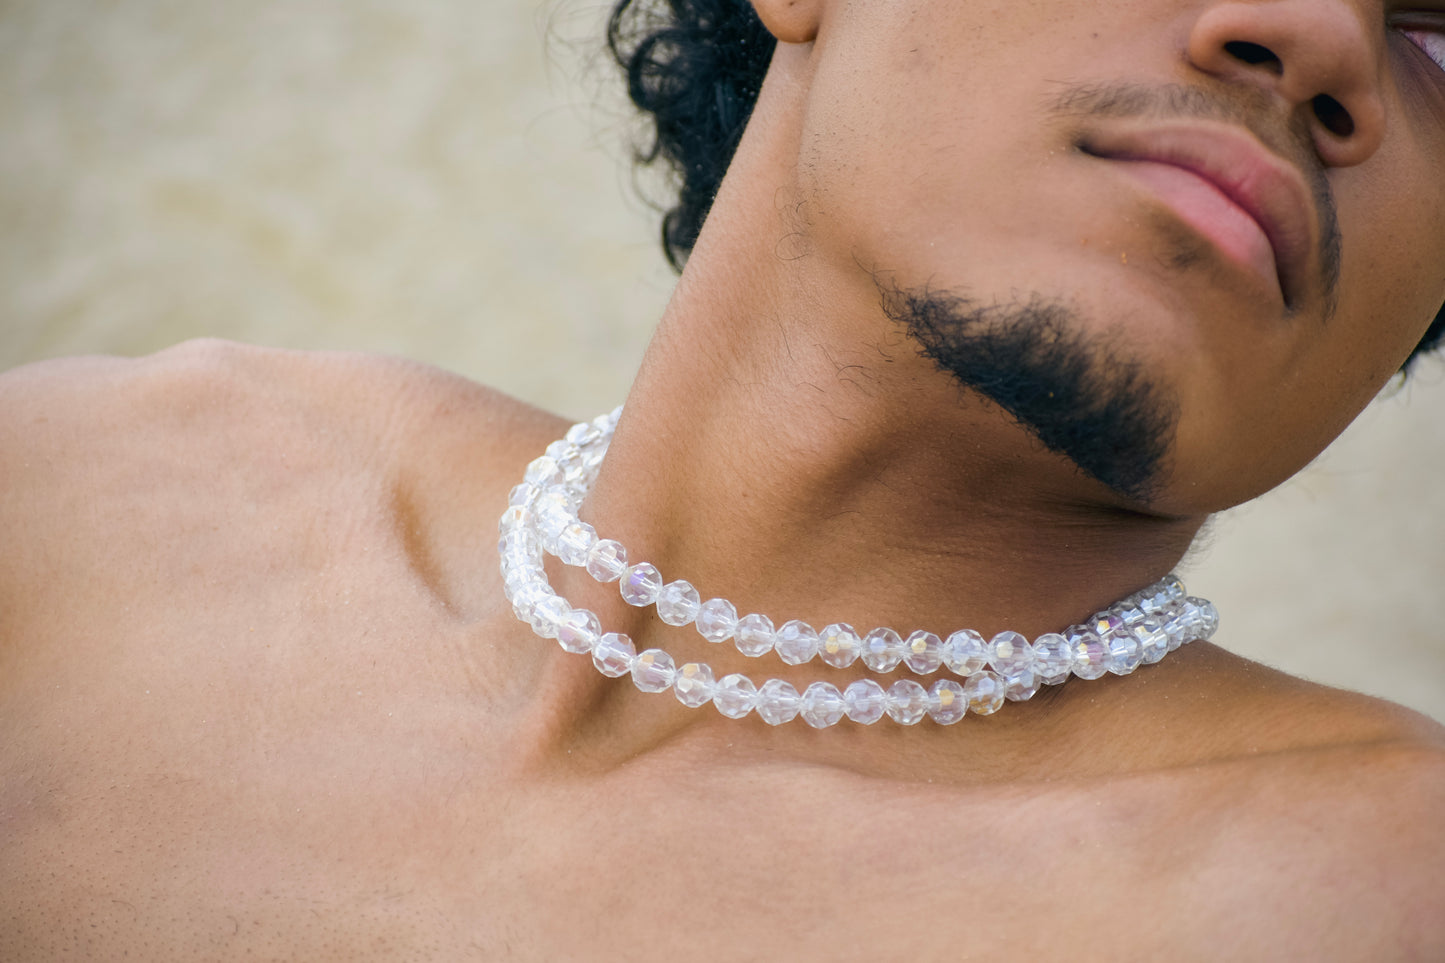 Double stranded Swarovski crystal necklace ￼